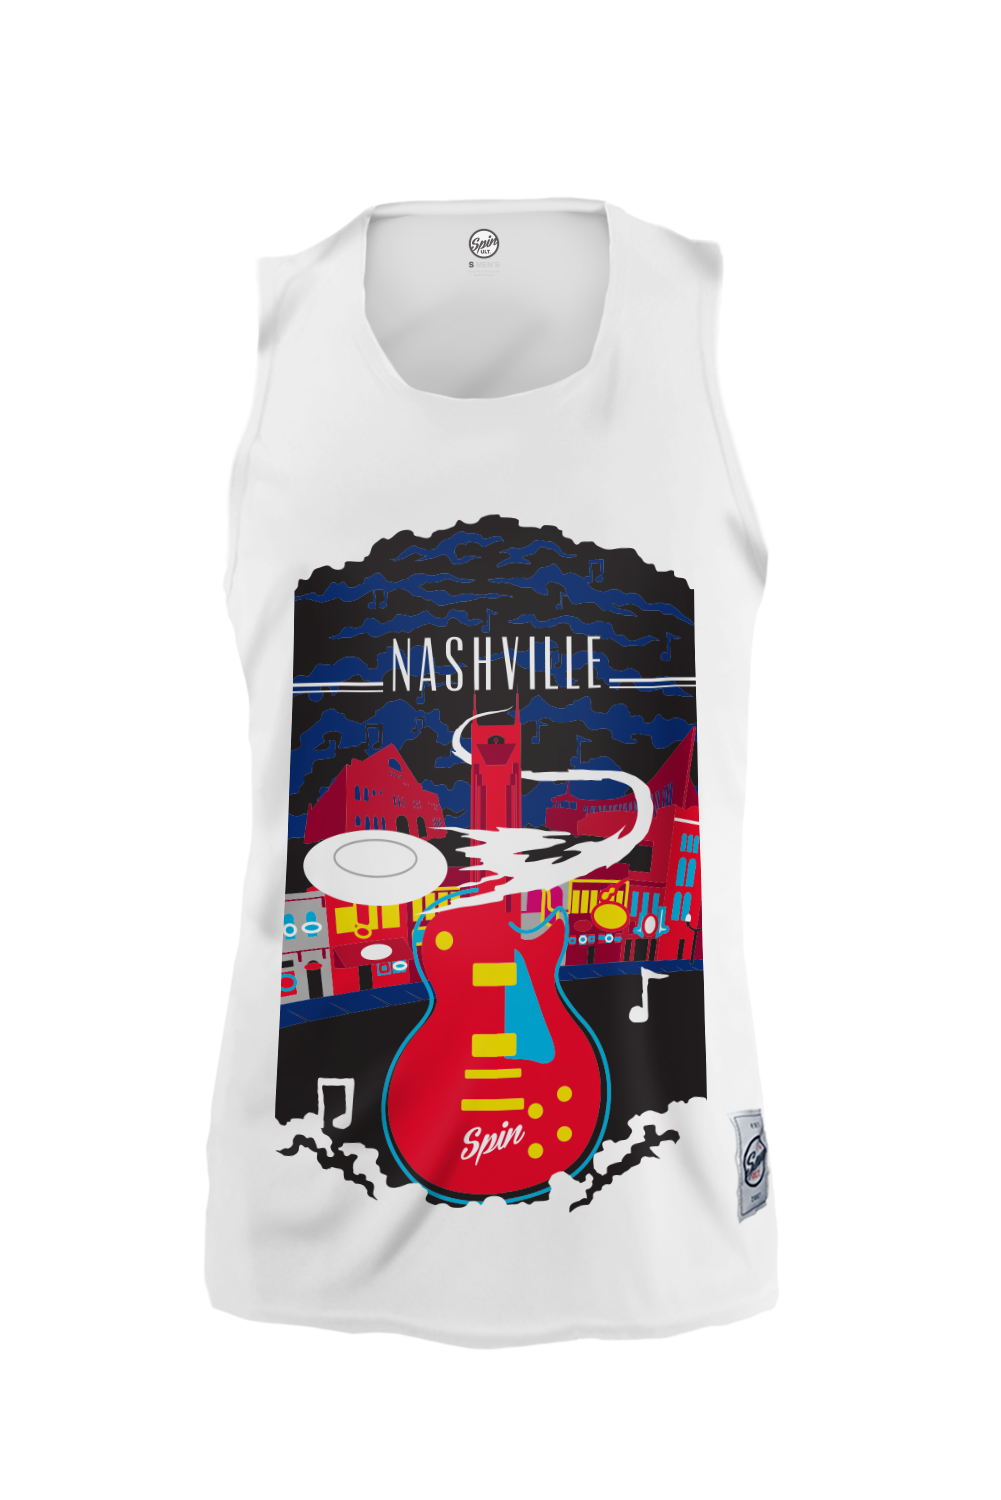 Nashville Tank – Spin Ultimate